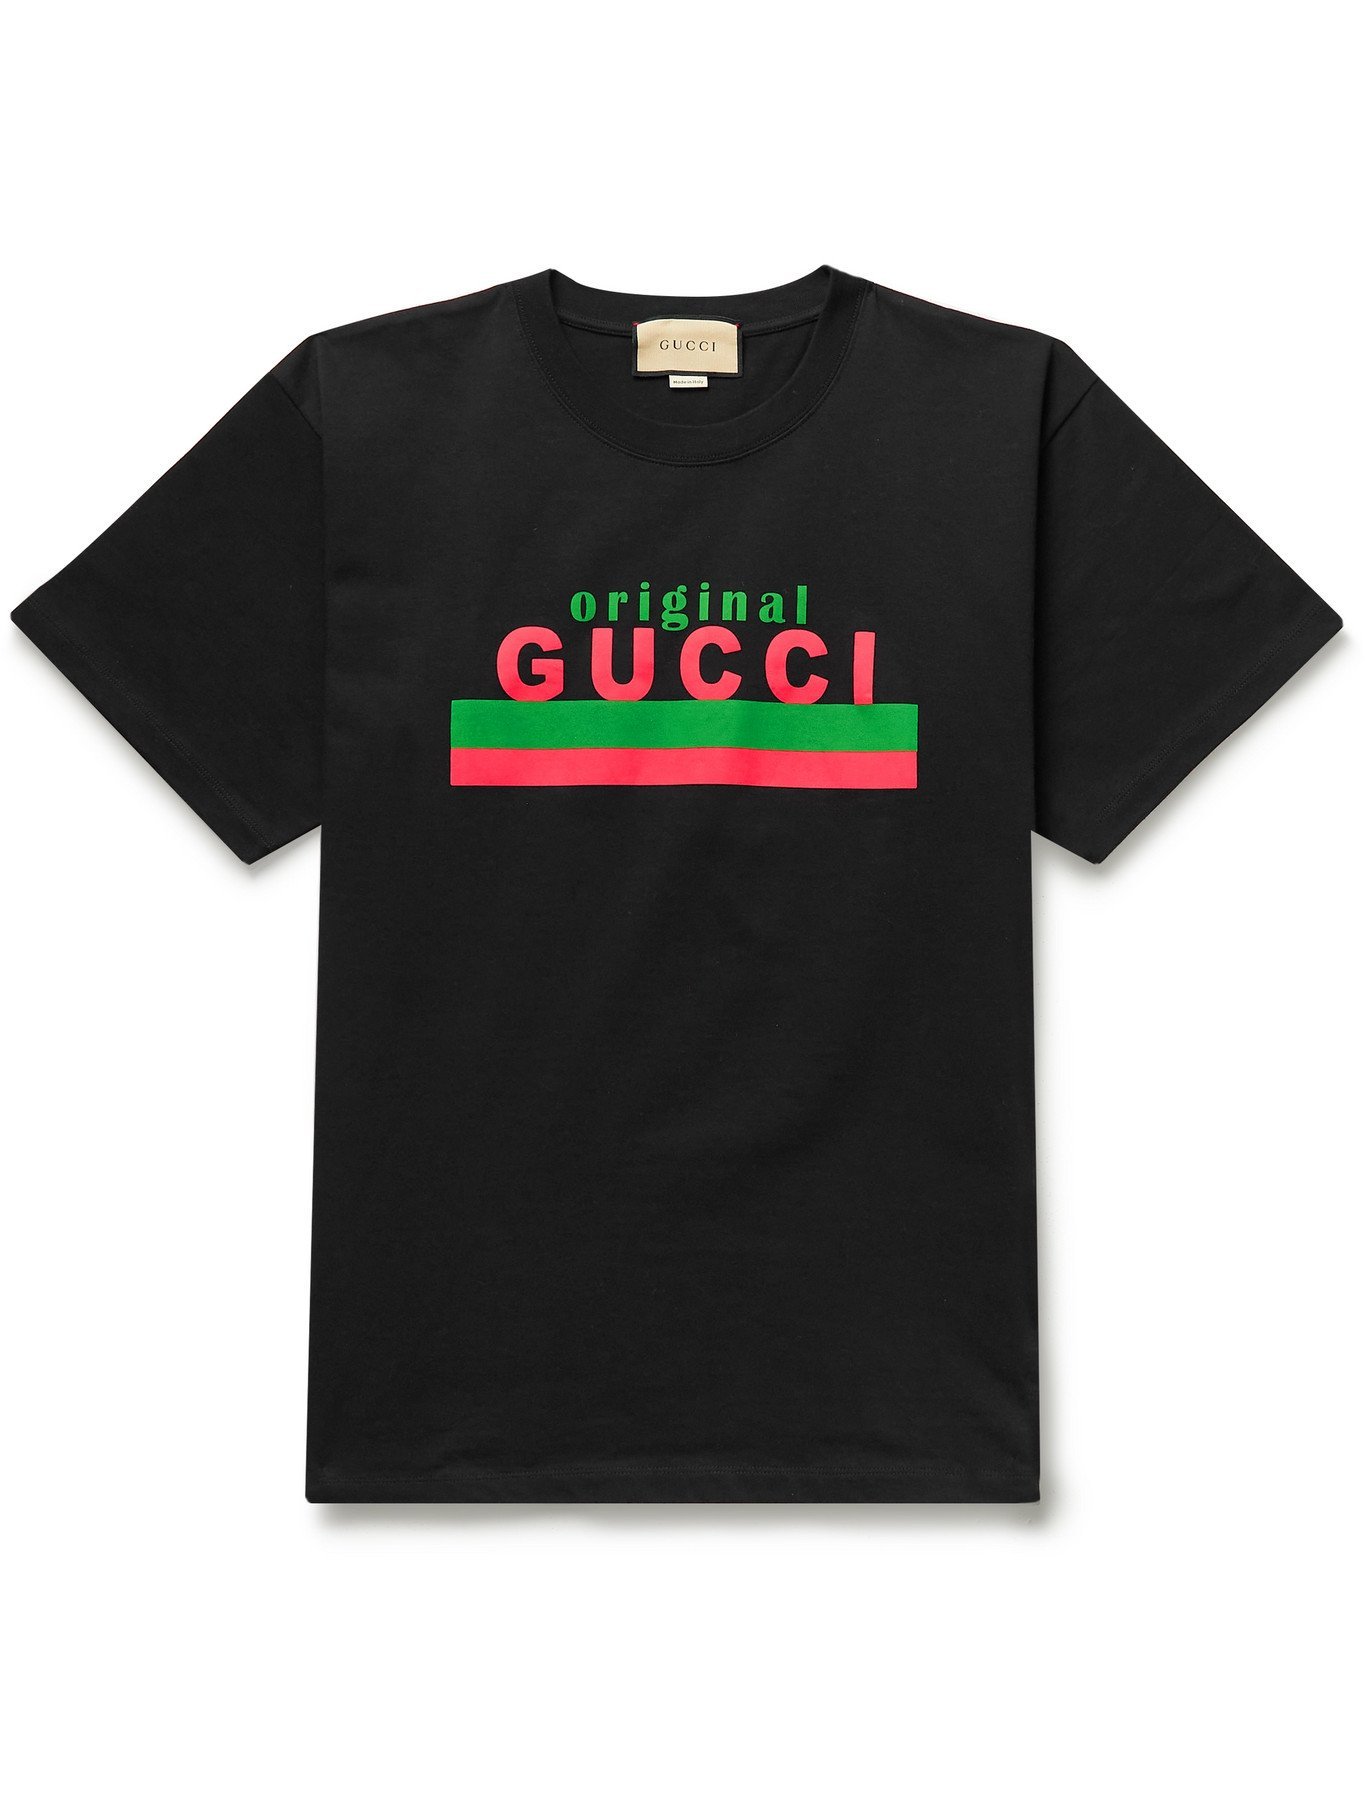 GUCCI LogoPrint CottonJersey TShirt Black M Gucci